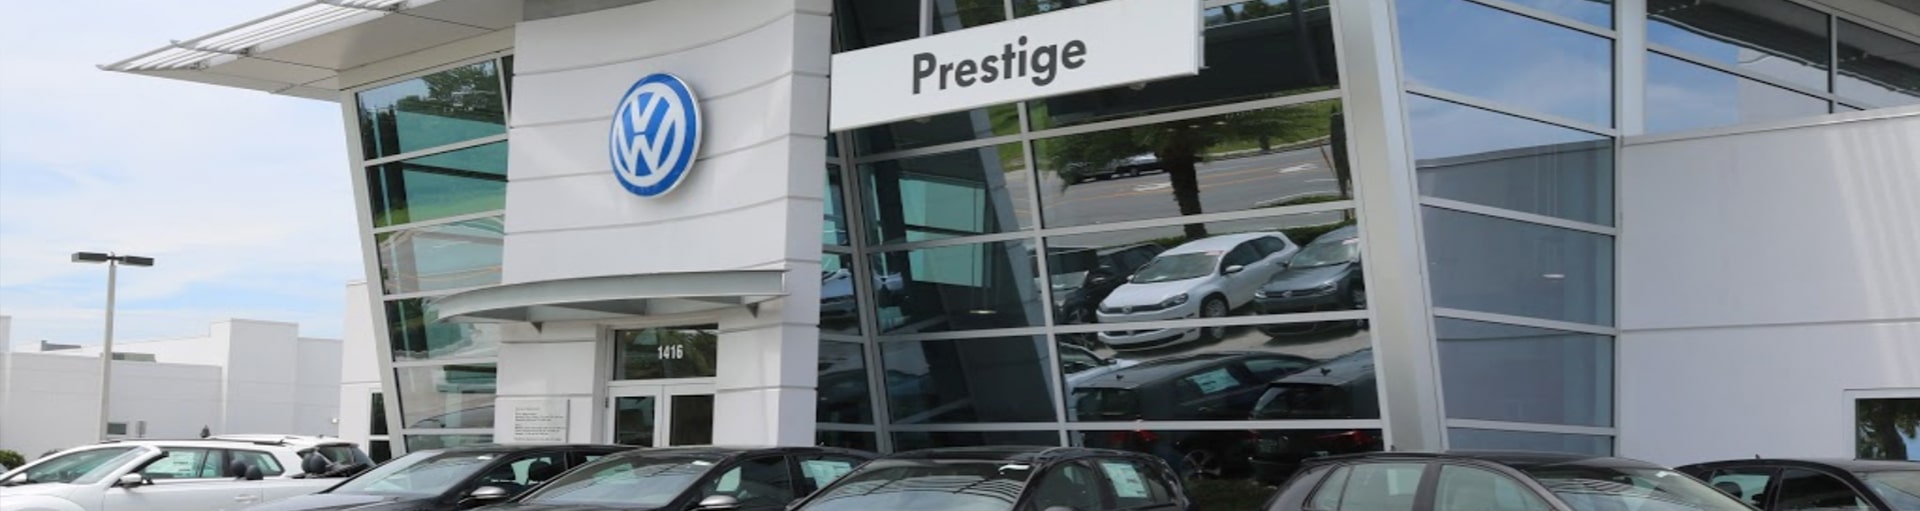 Prestige Volkswagen of Melbourne Service Near Merritt Island, FL